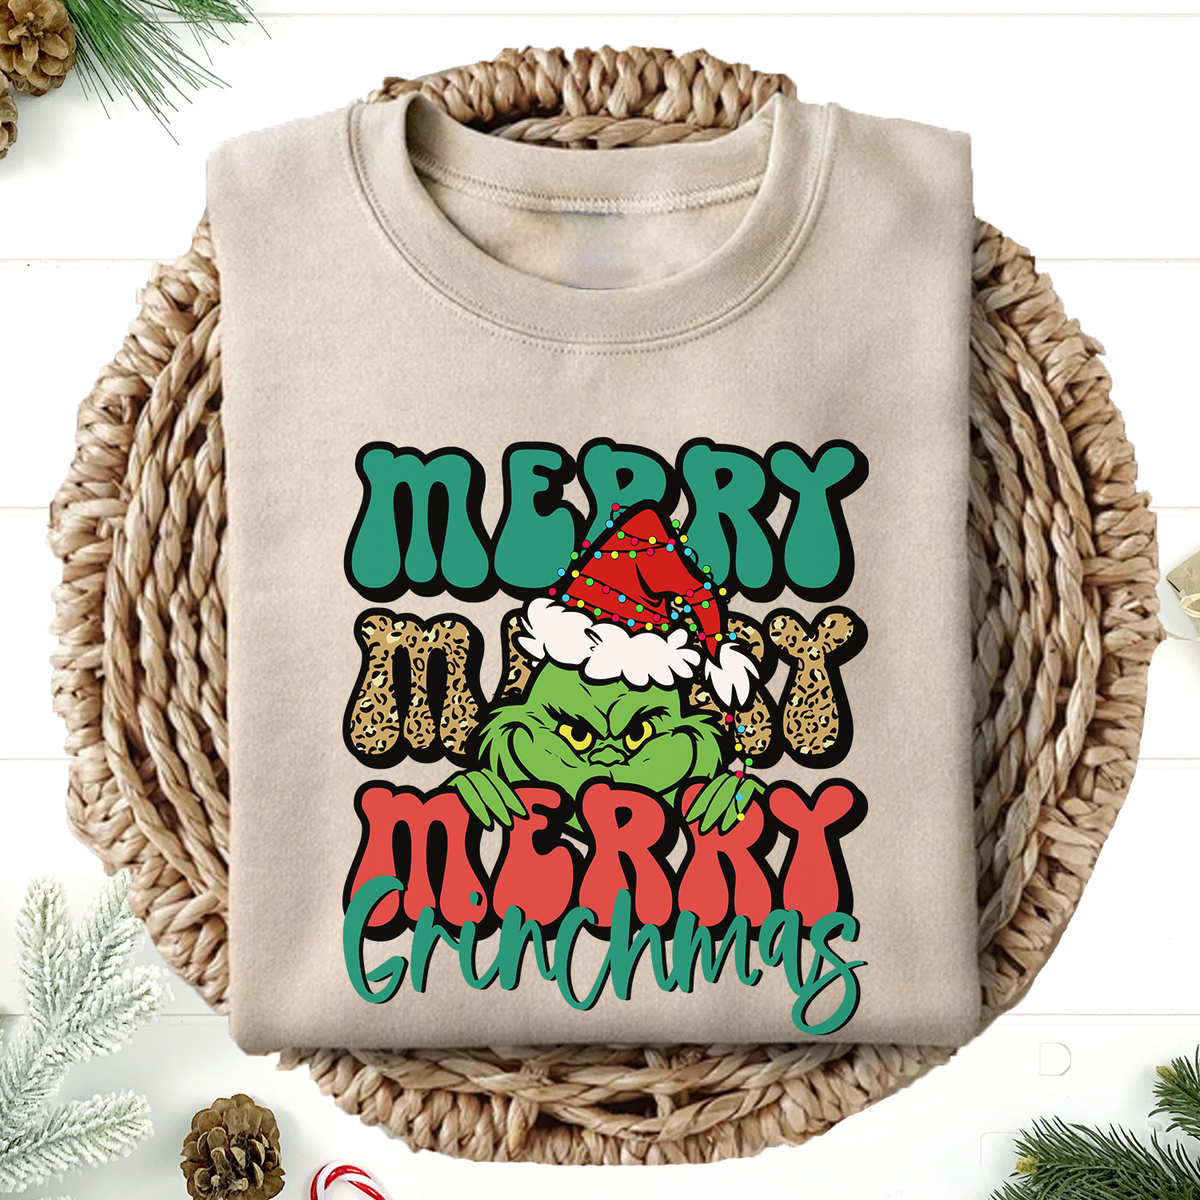 LIMITED DESIGN - Merry Merry Merry Grinchmas Christmas Sweatshirt